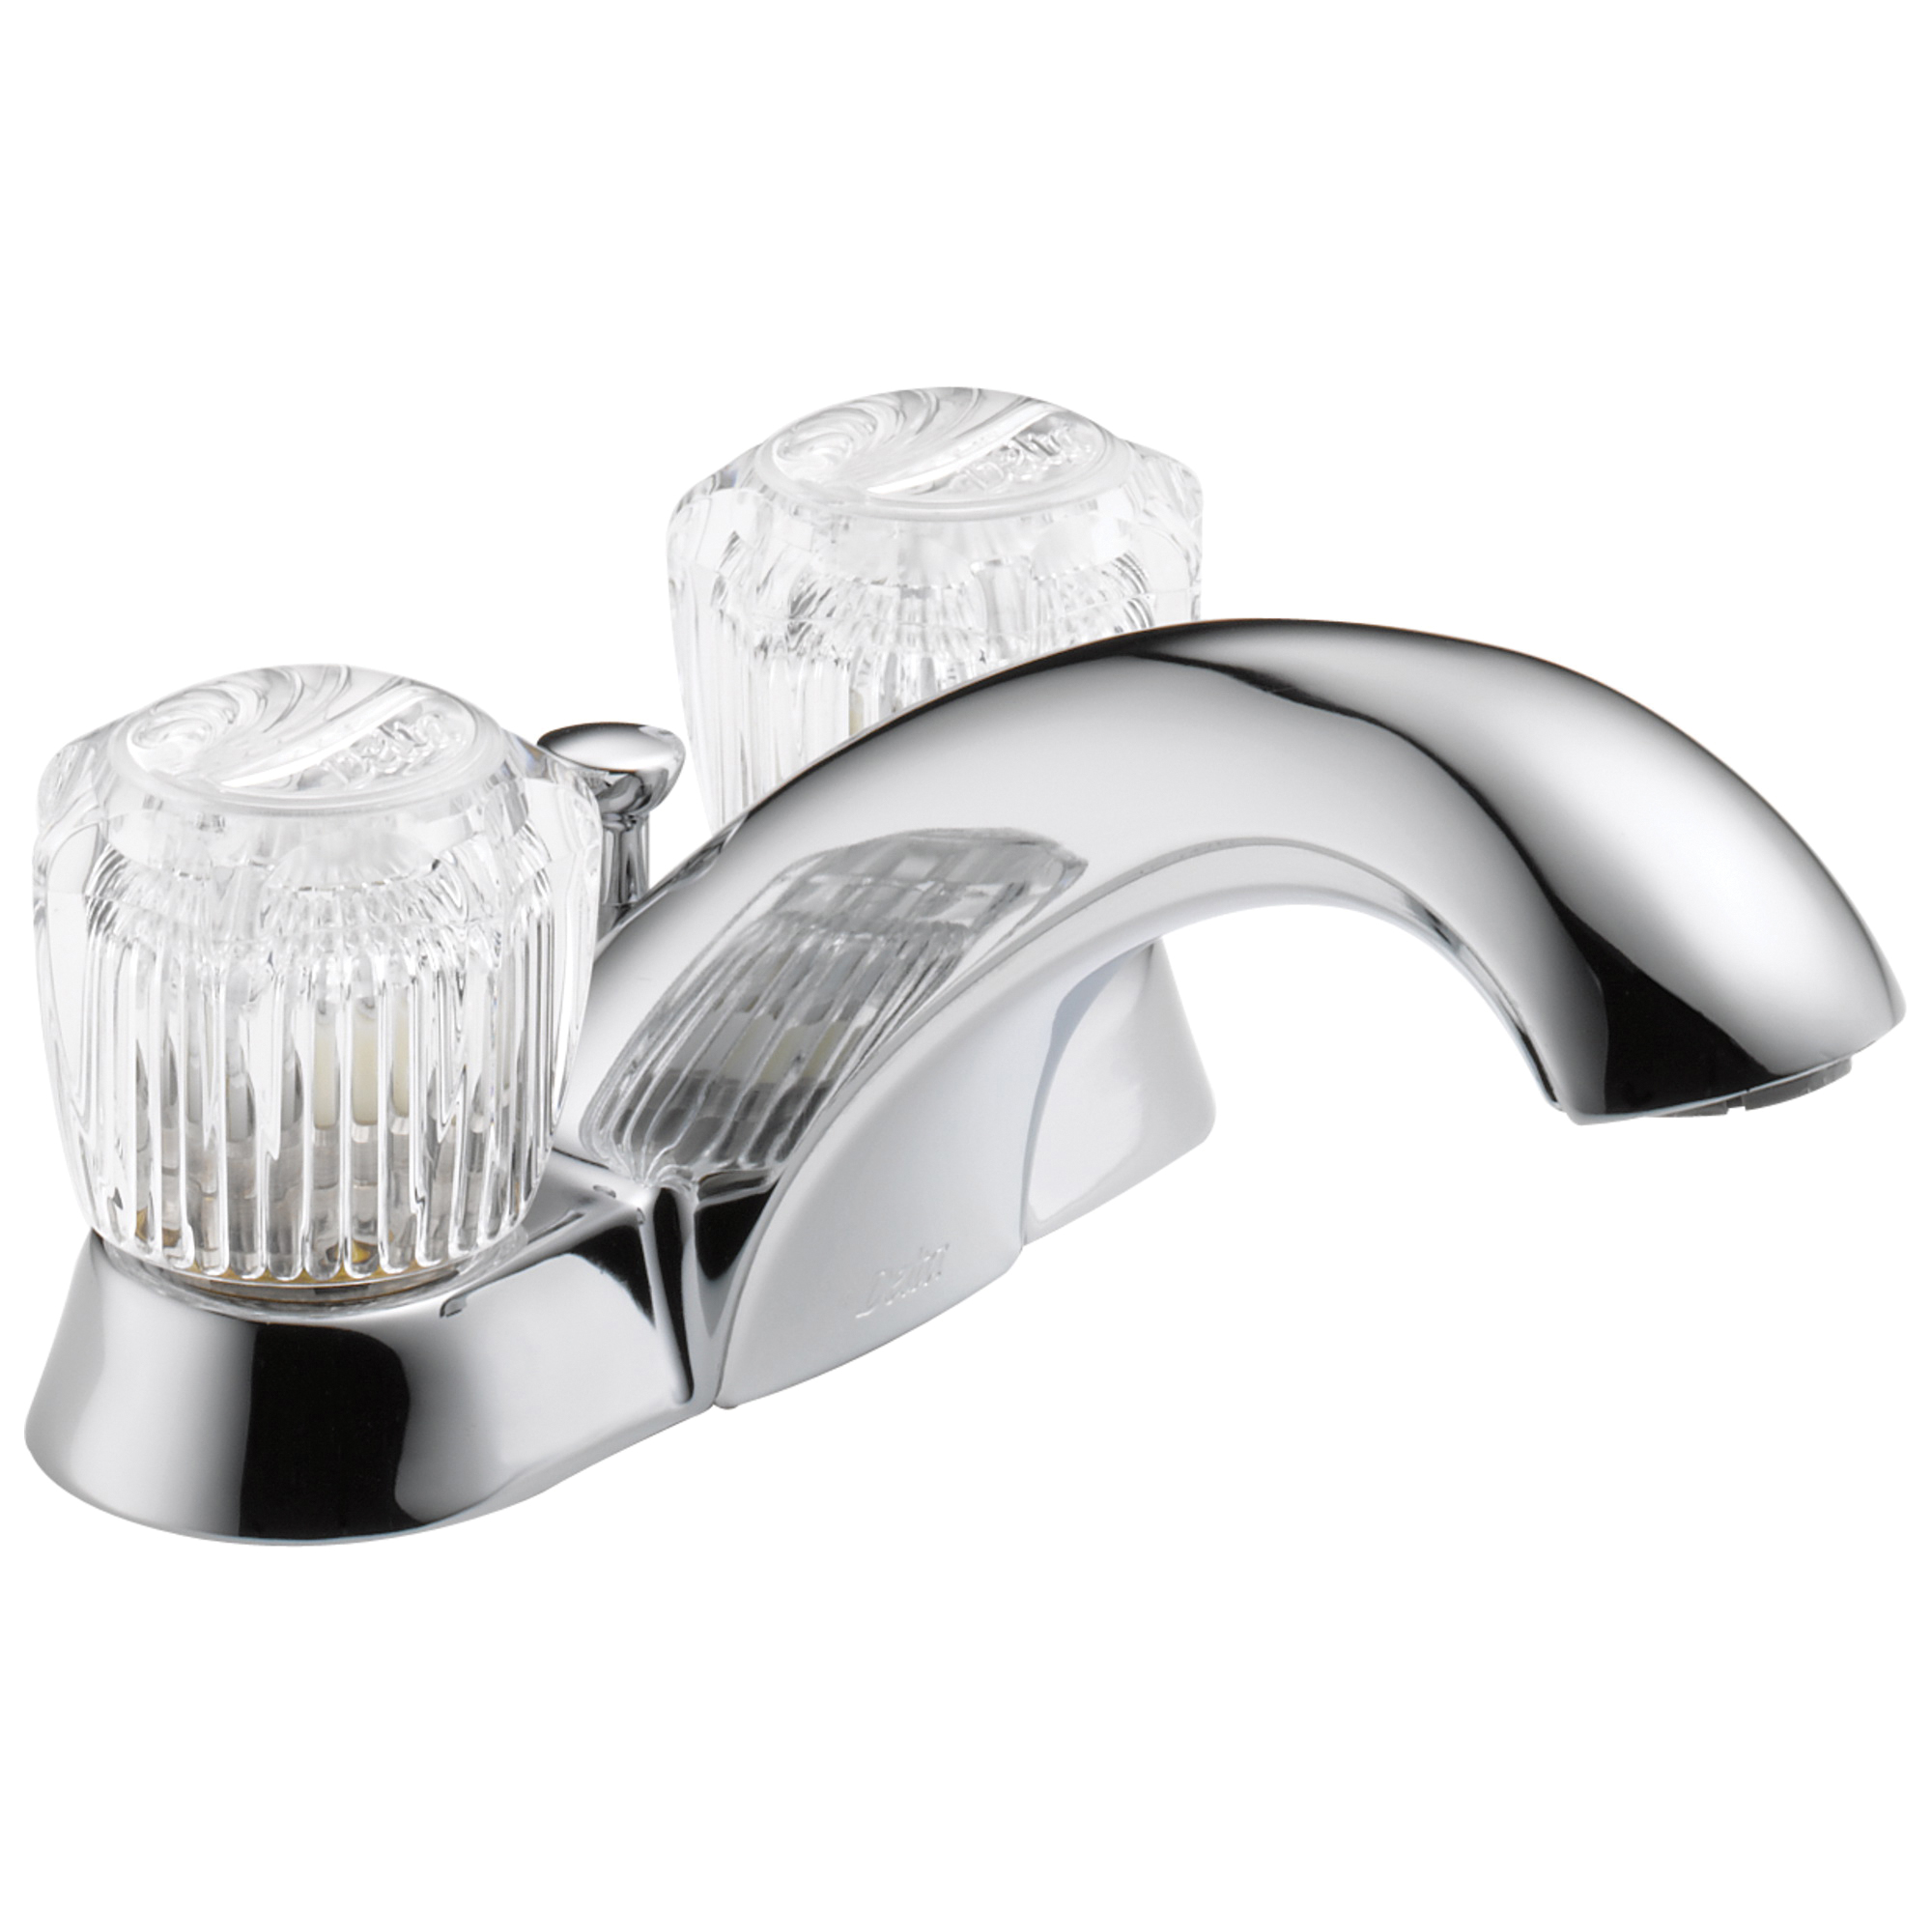 DELTA® 2522LF Centerset Lavatory Faucet, Classic, Chrome Plated, 2 Handles, Polypropylene Pop-Up Drain, 1.2 gpm